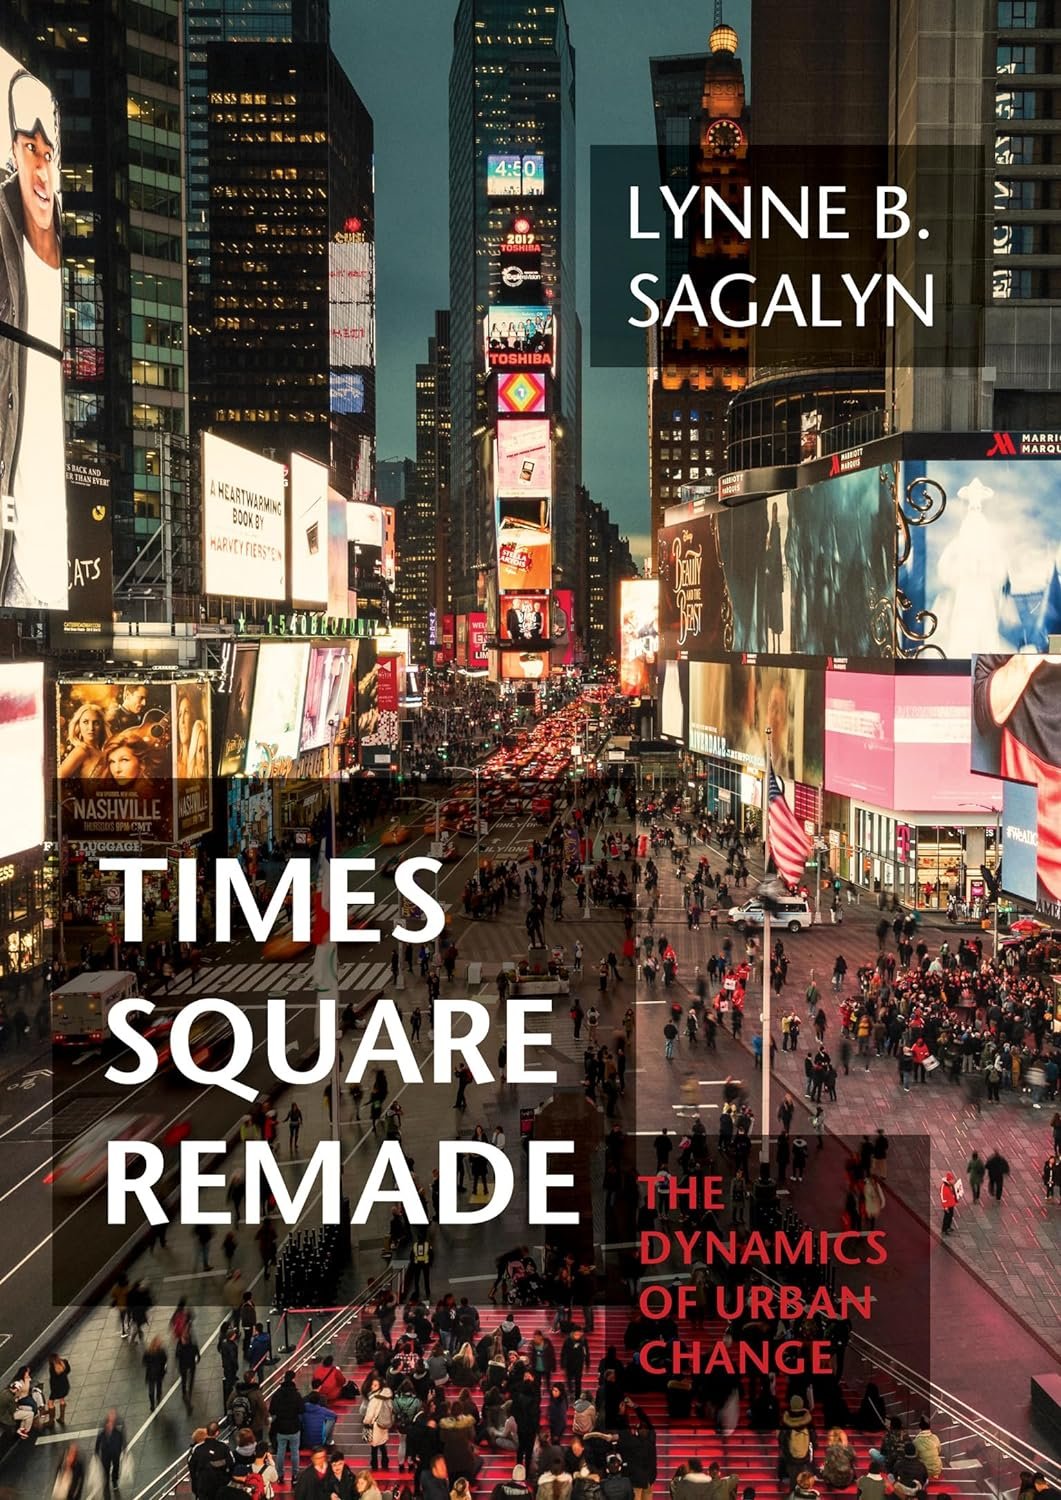 "Times Square Remade" by Lynne B. Sagalyn (WSJ)